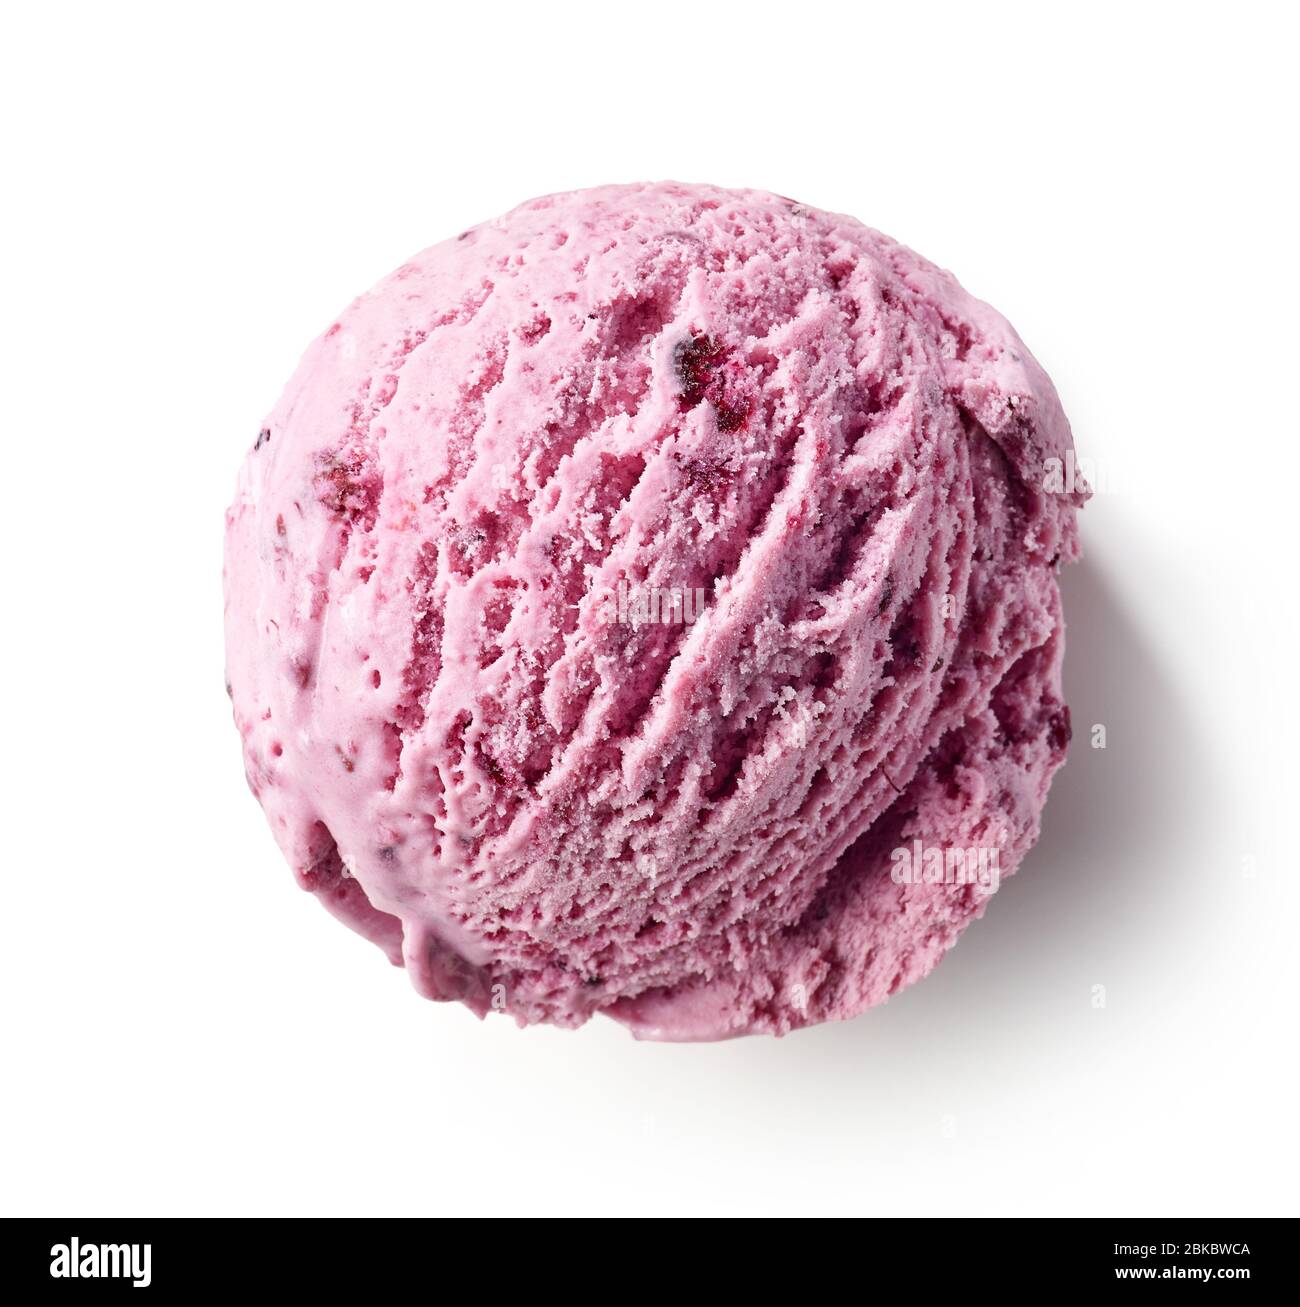 https://c8.alamy.com/comp/2BKBWCA/pink-ice-cream-scoop-isolated-on-white-background-top-view-2BKBWCA.jpg